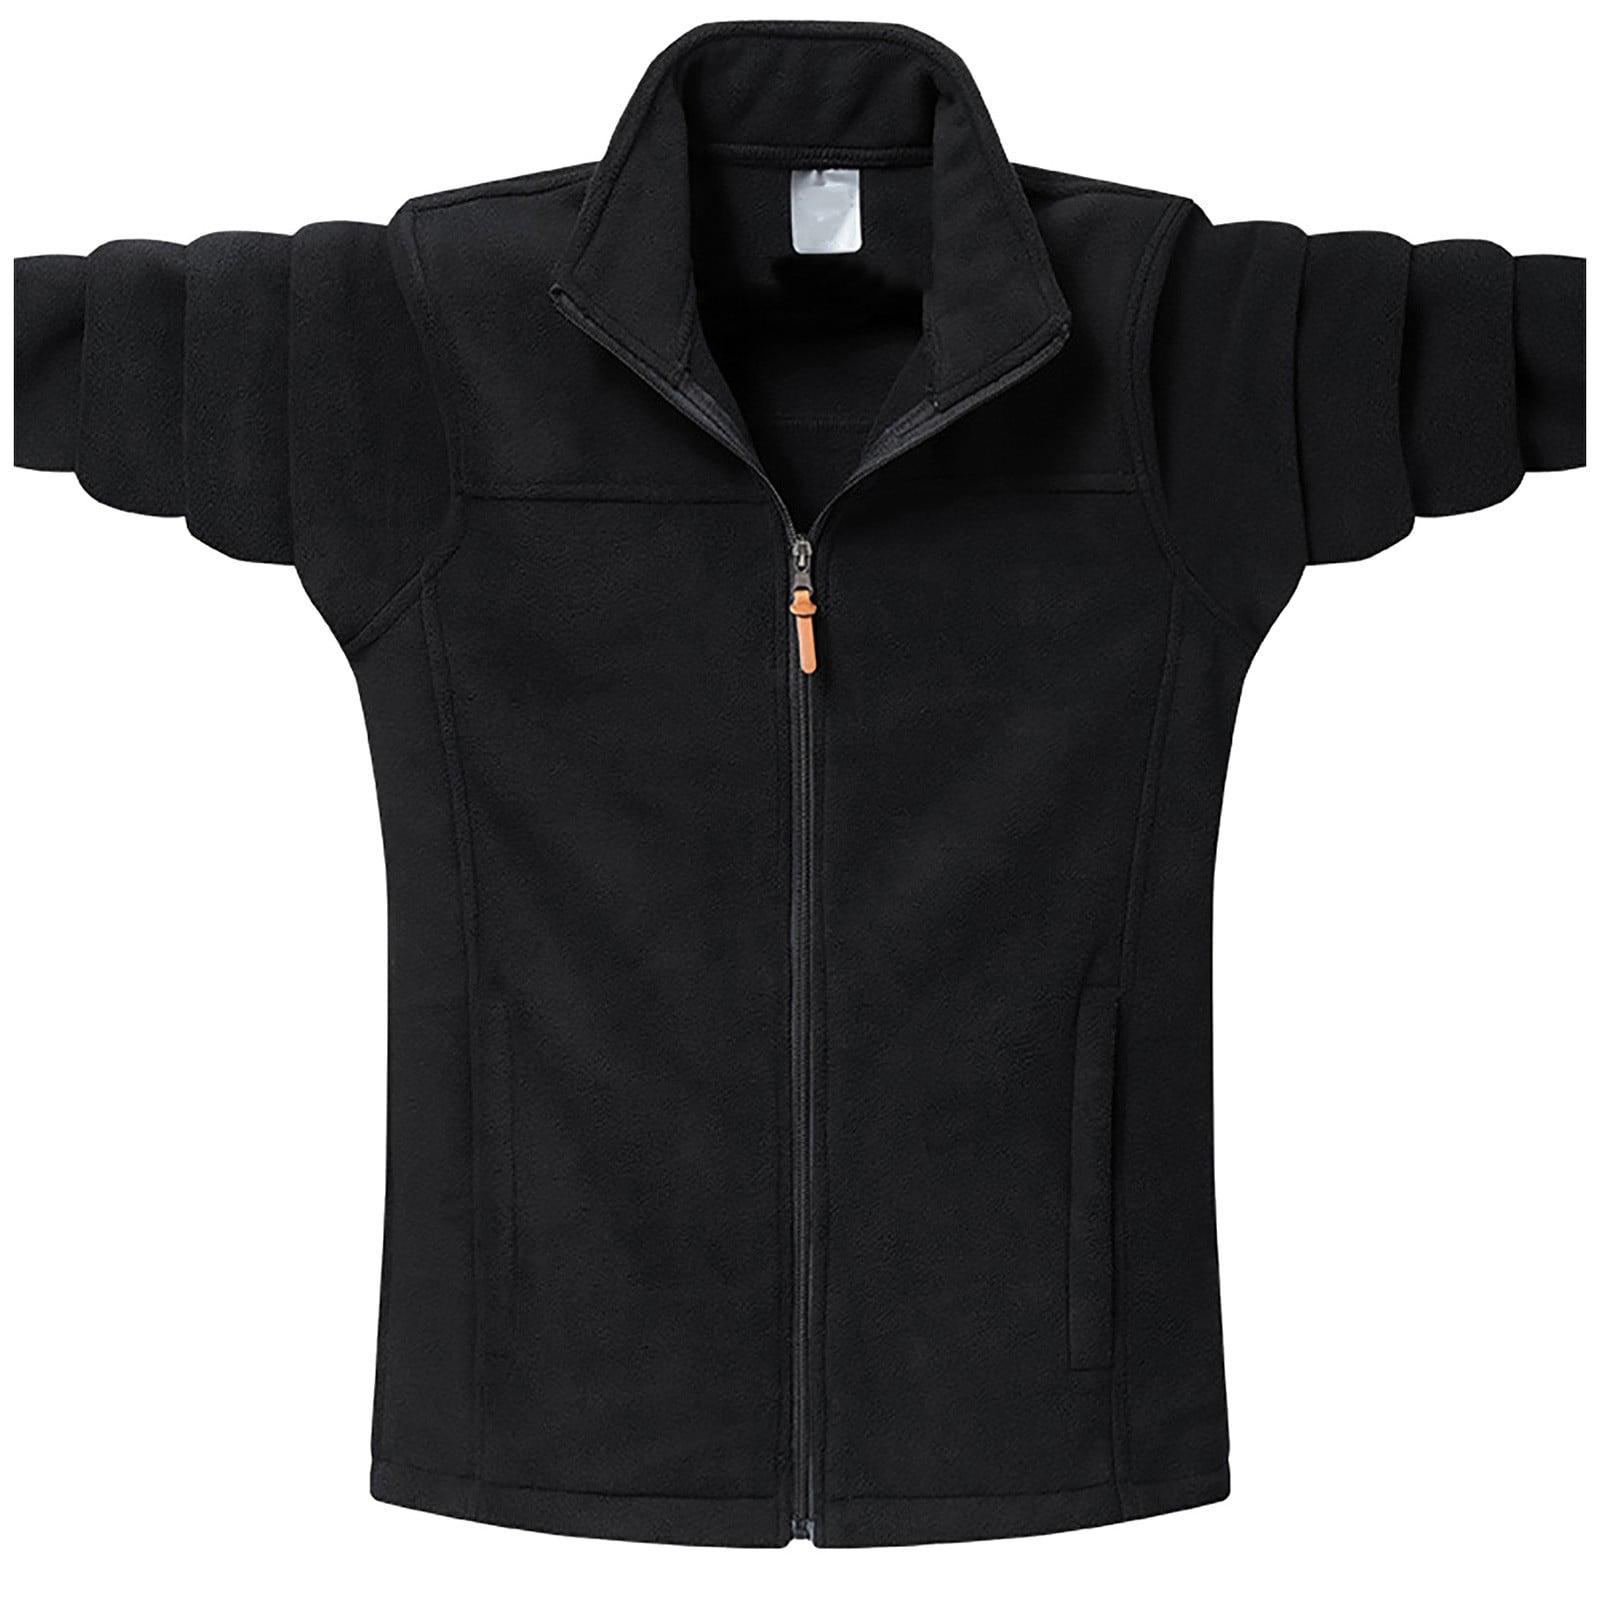 LEEy-world Men'S Long Sleeve Sherpa Lined Shirt Jacket Flannel Plaid ...